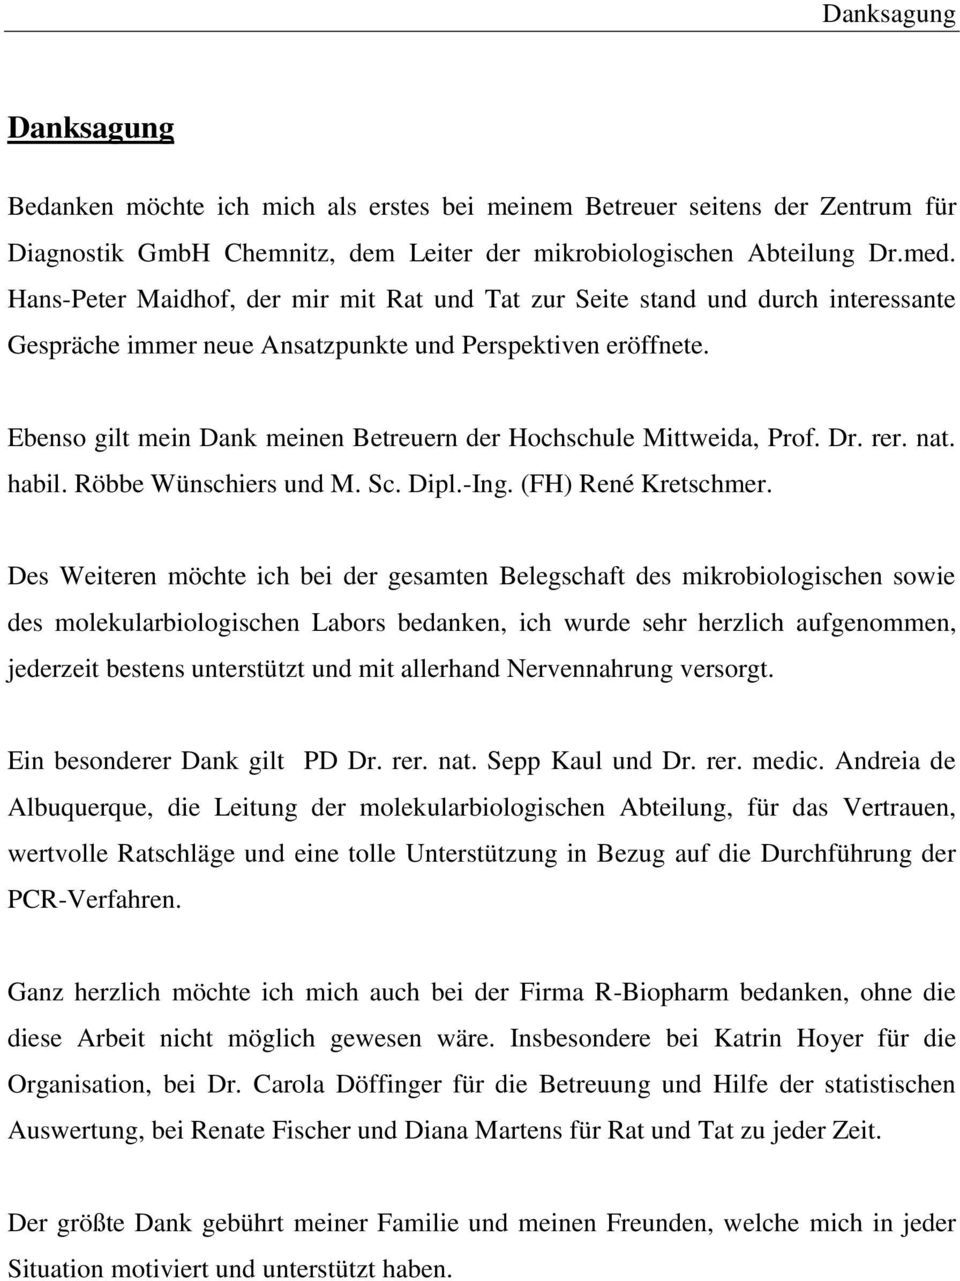 Ebenso gilt mein Dank meinen Betreuern der Hochschule Mittweida, Prof. Dr. rer. nat. habil. Röbbe Wünschiers und M. Sc. Dipl.-Ing. (FH) René Kretschmer.